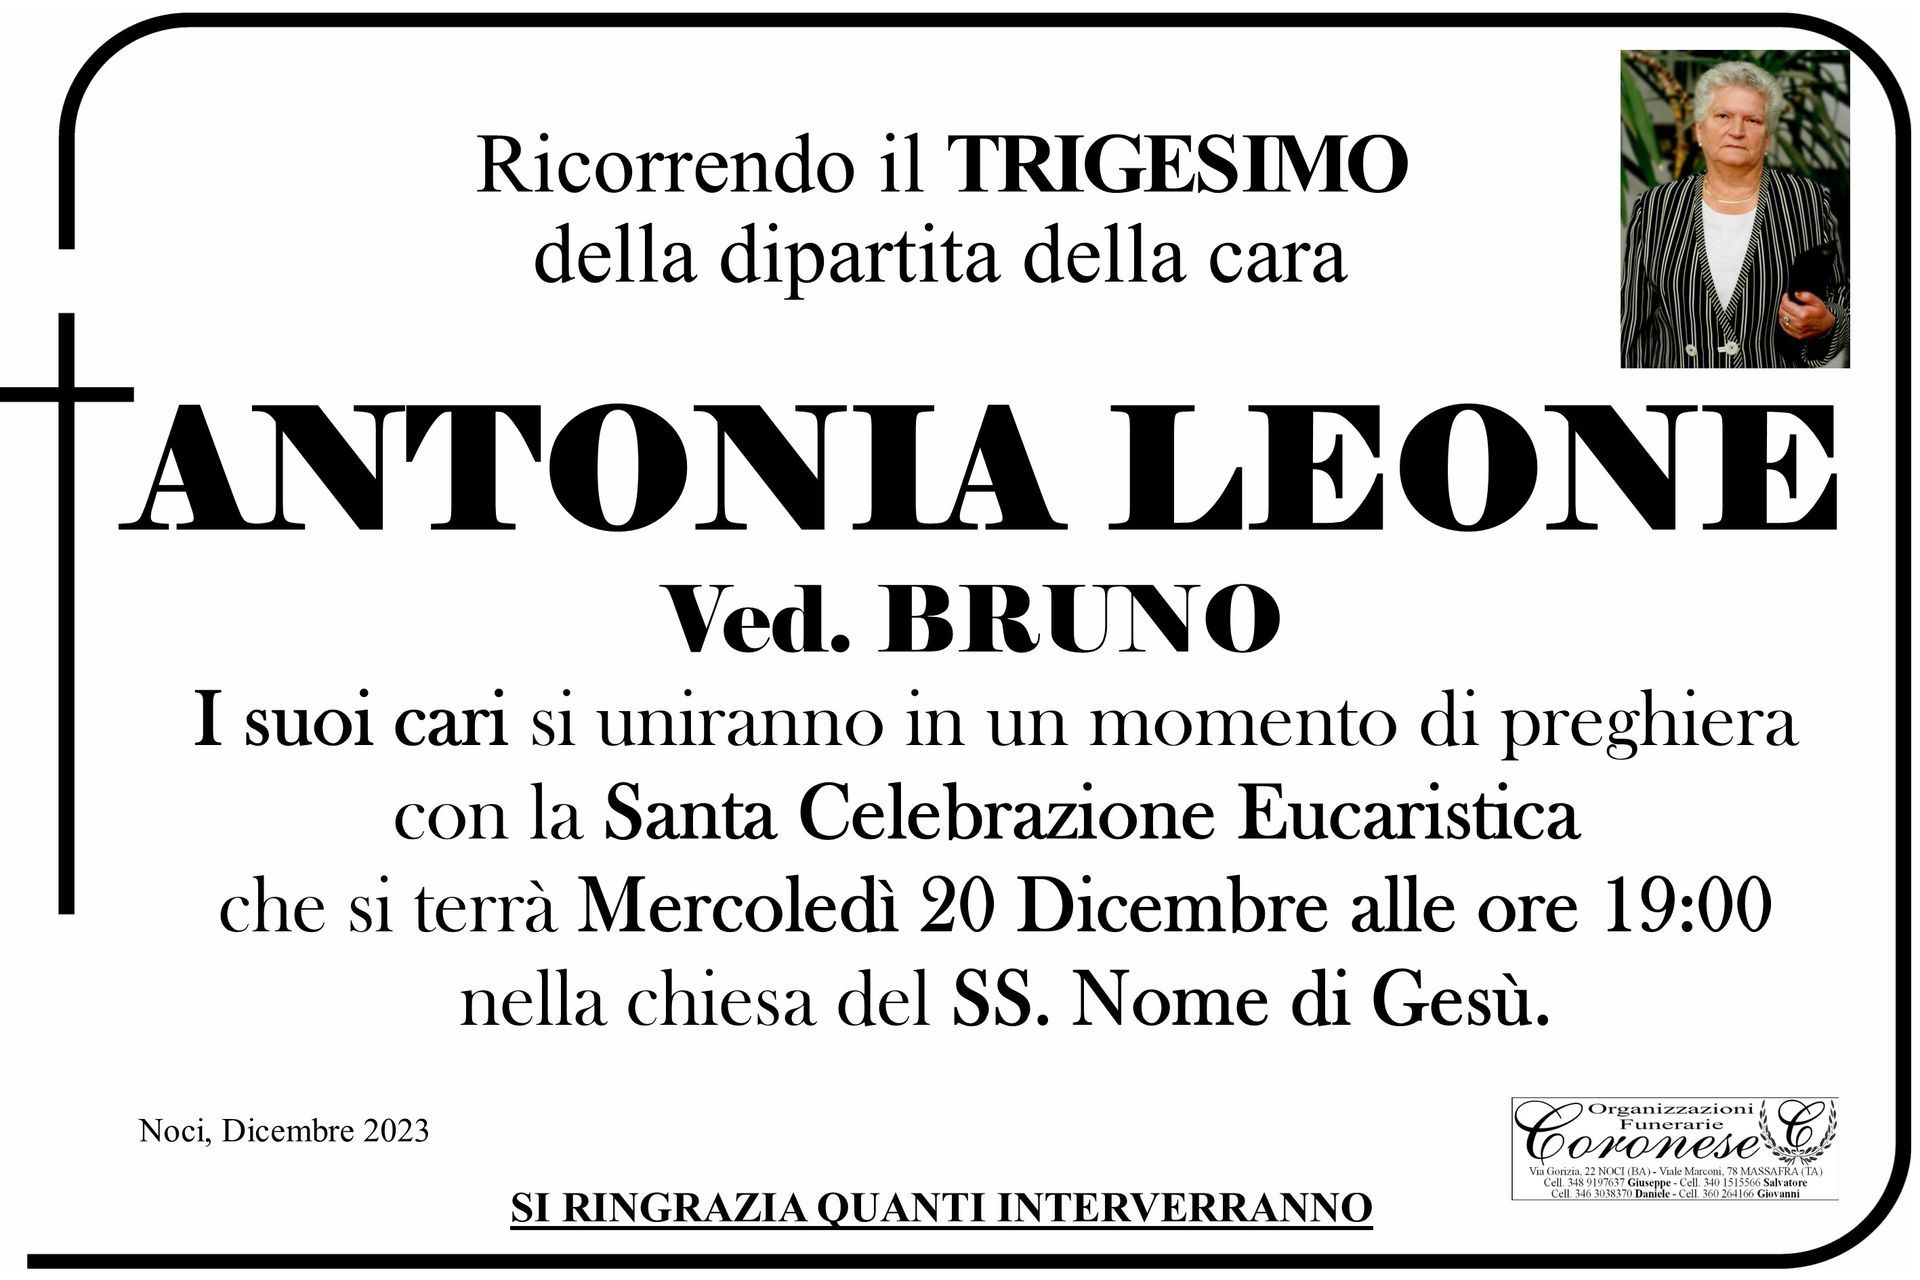 necrologio ANTONIA LEONE Ved. Bruno